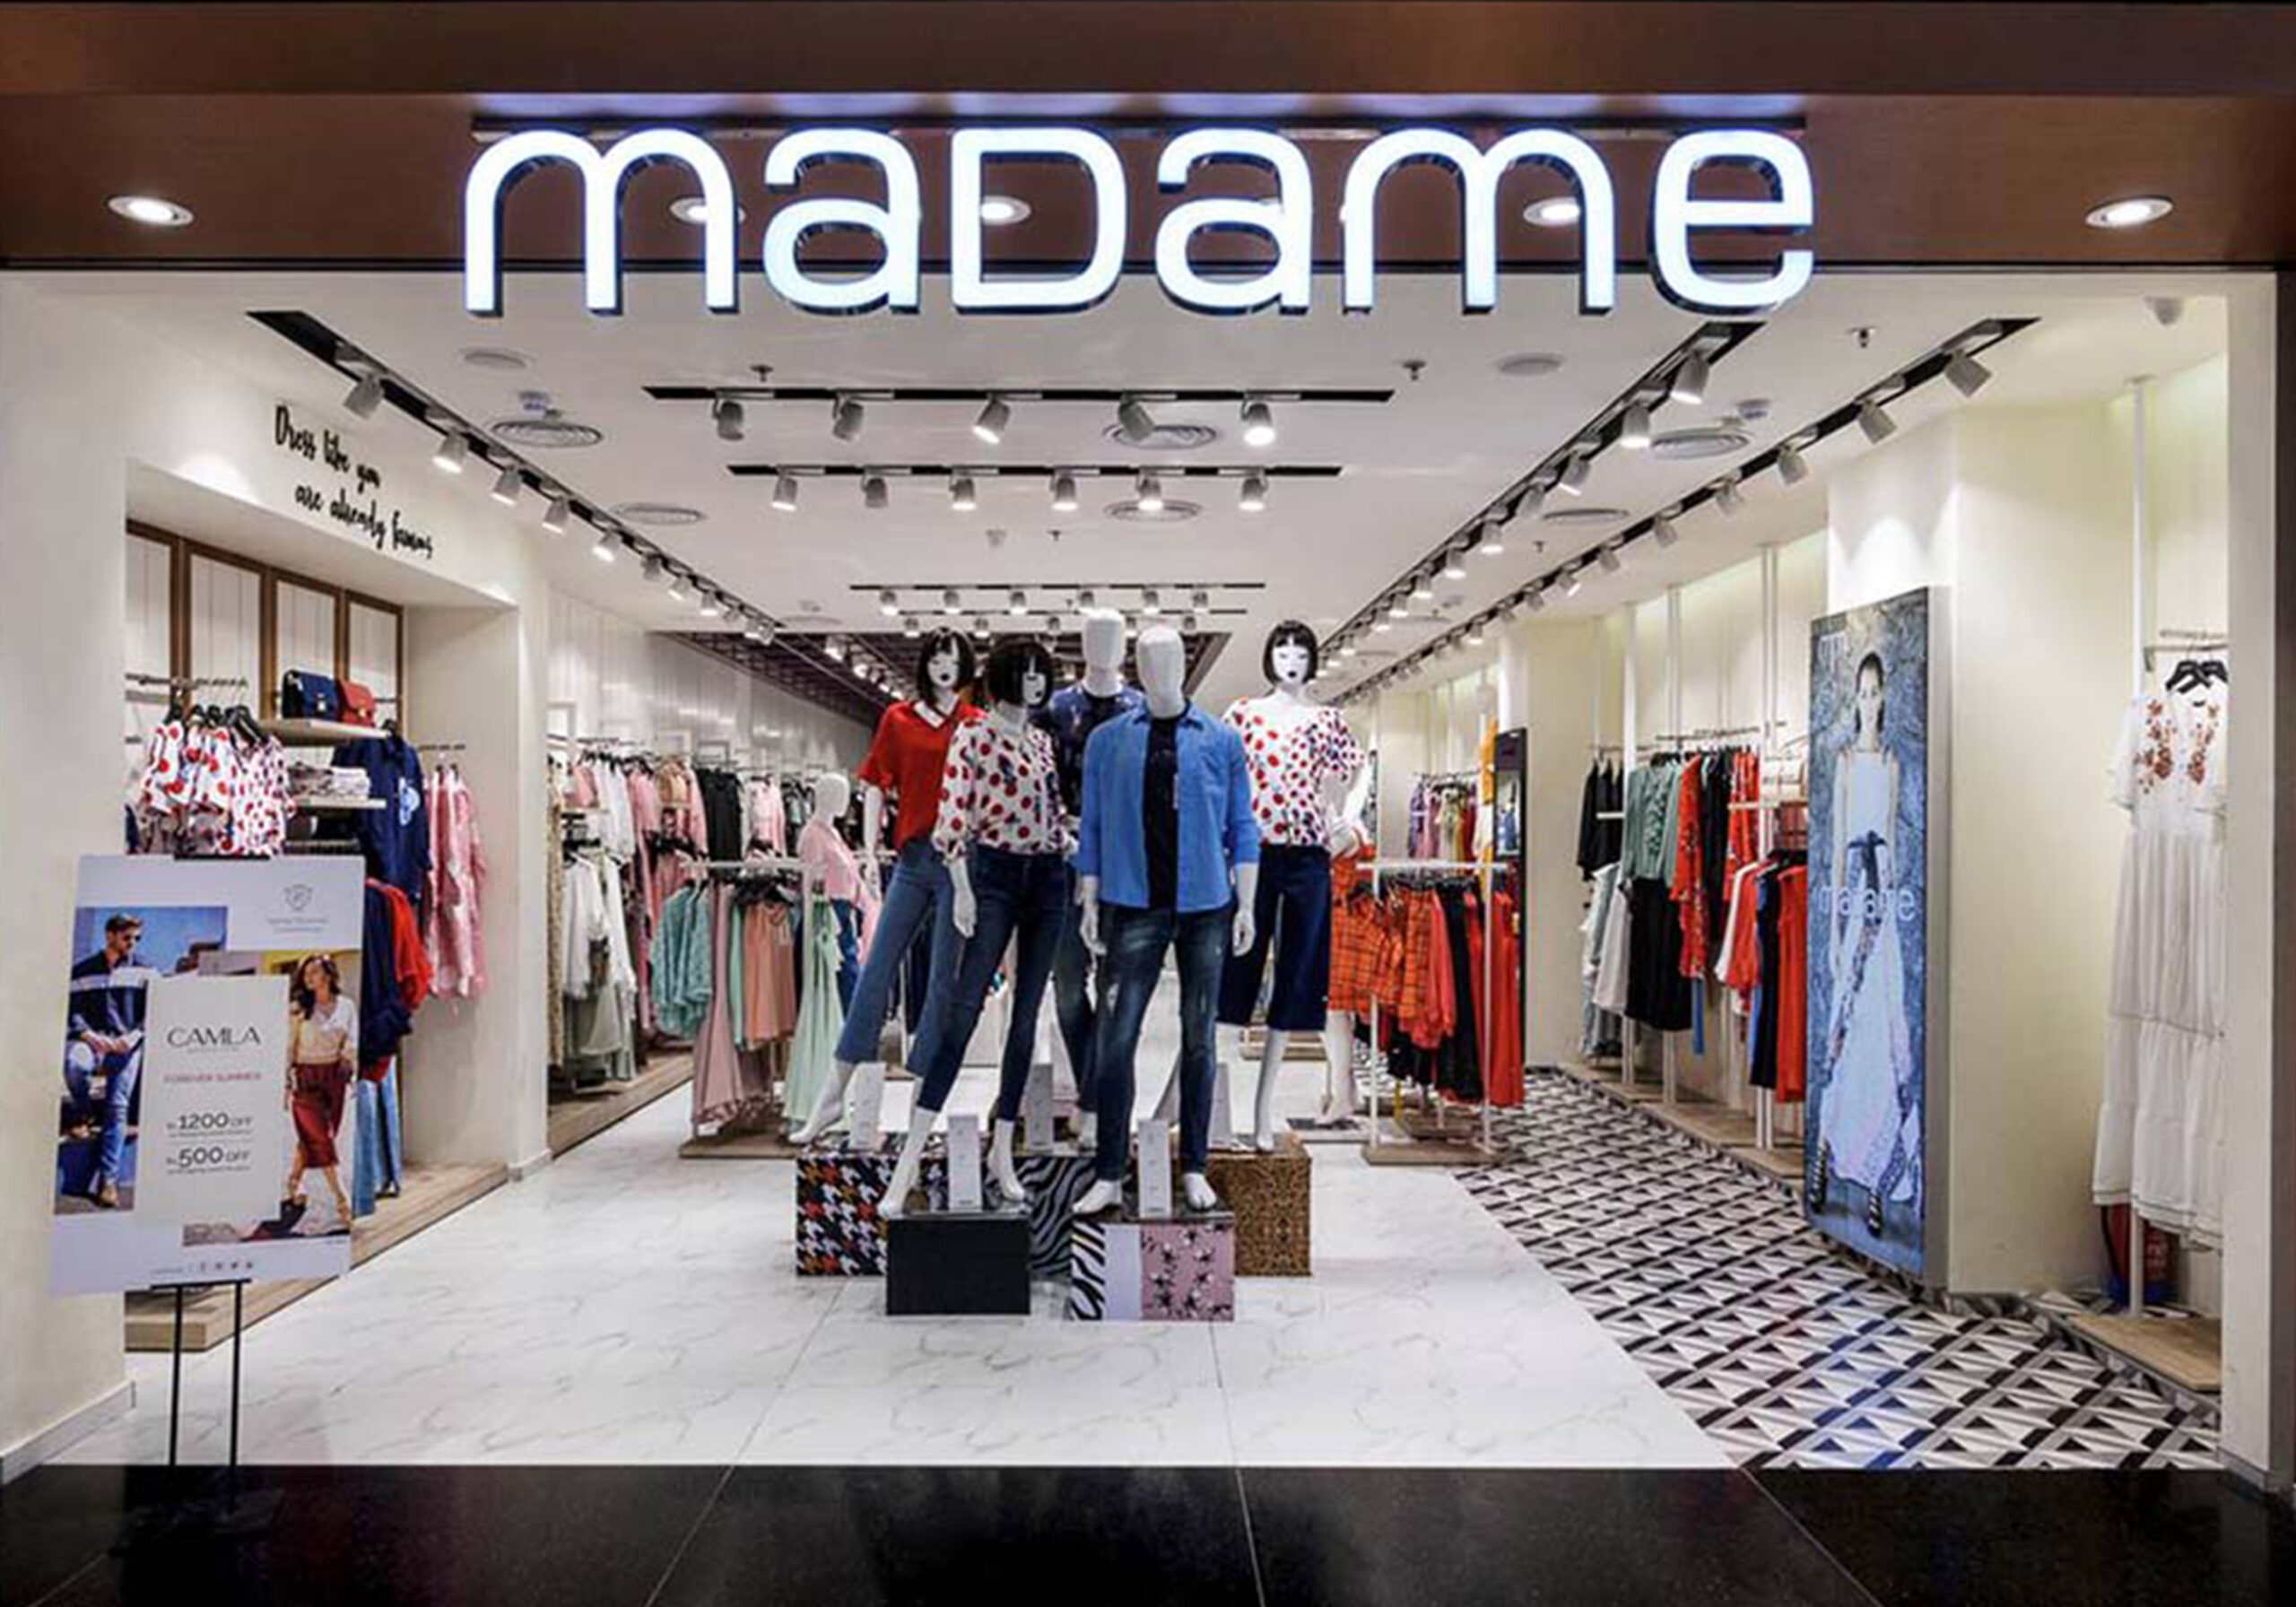 Madame Store, Pacific Mall